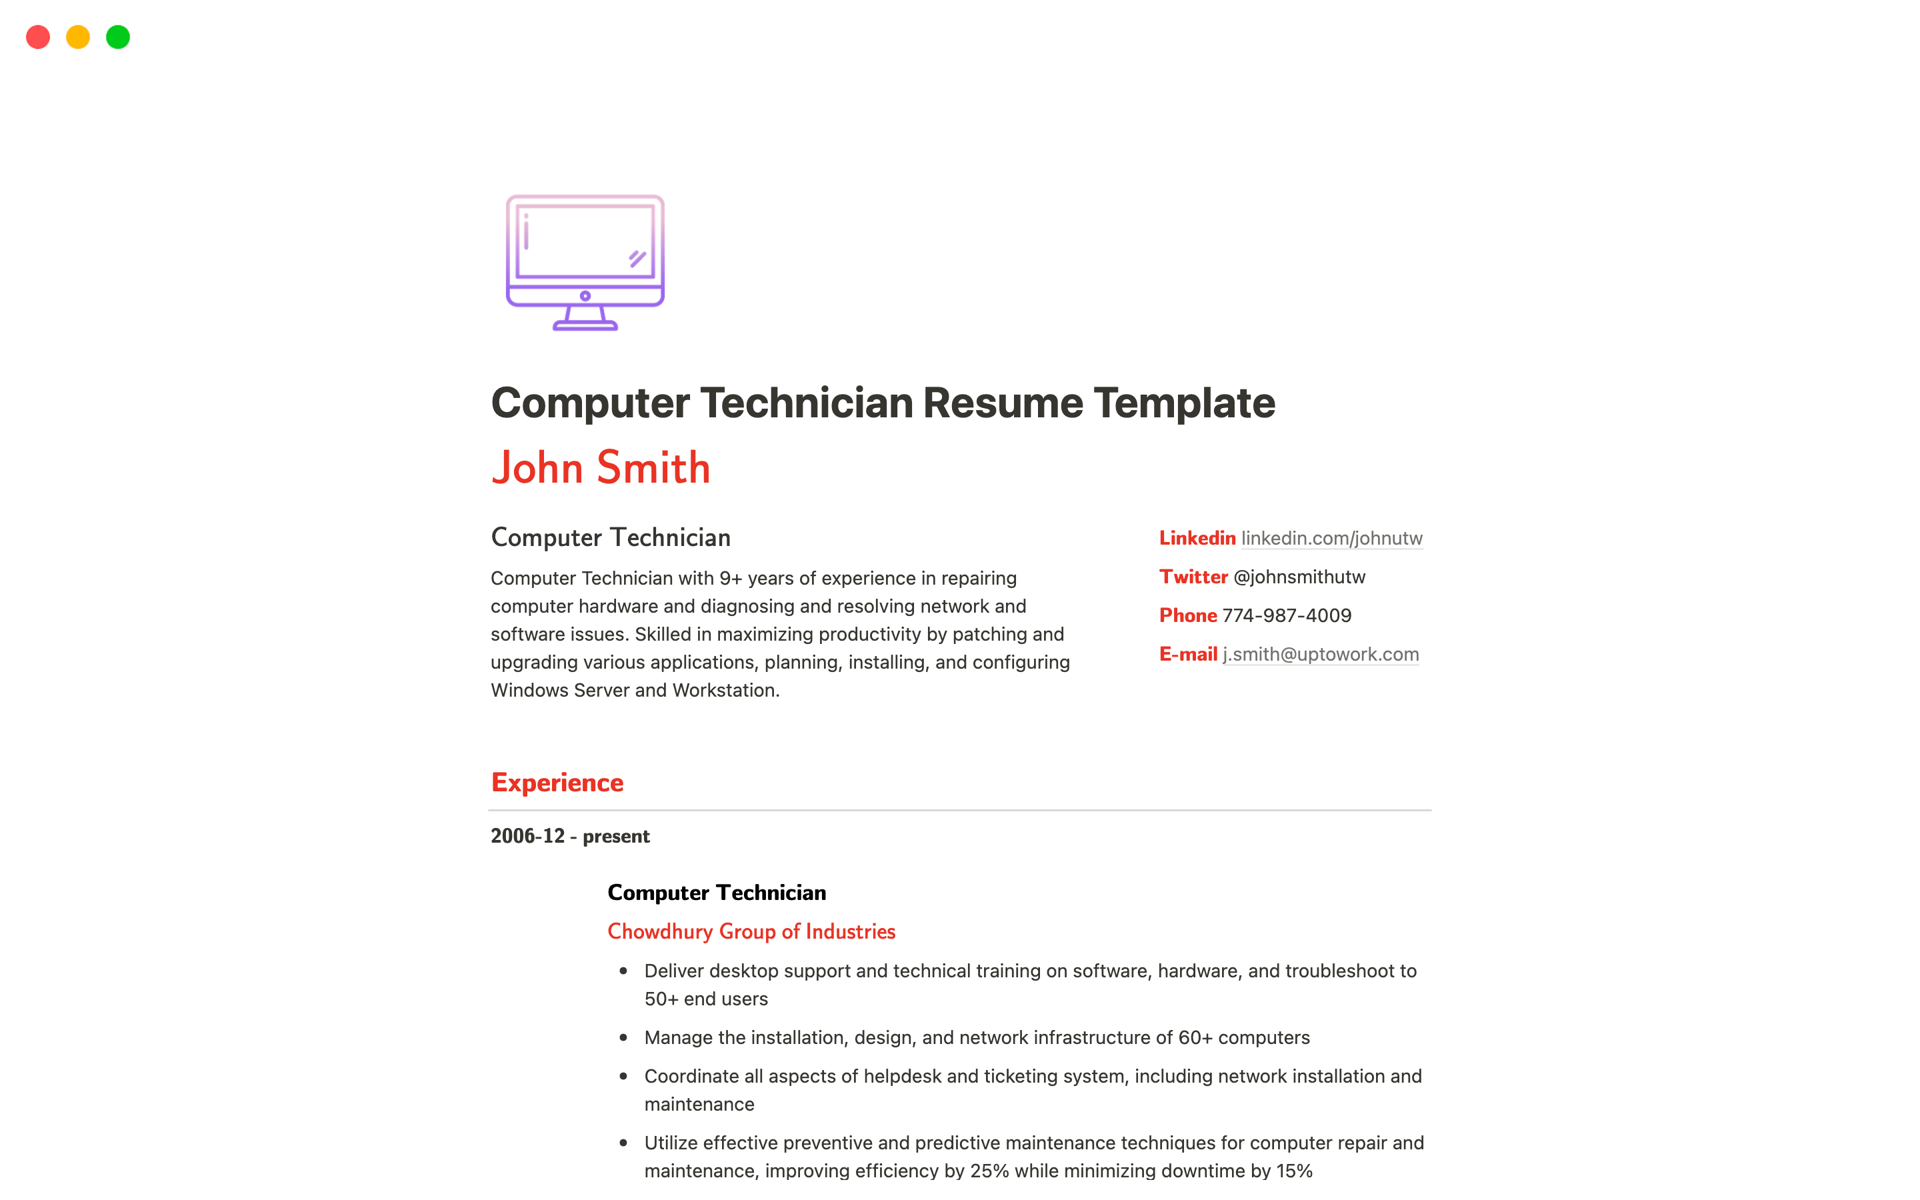 En forhåndsvisning av mal for Computer Technician Resume